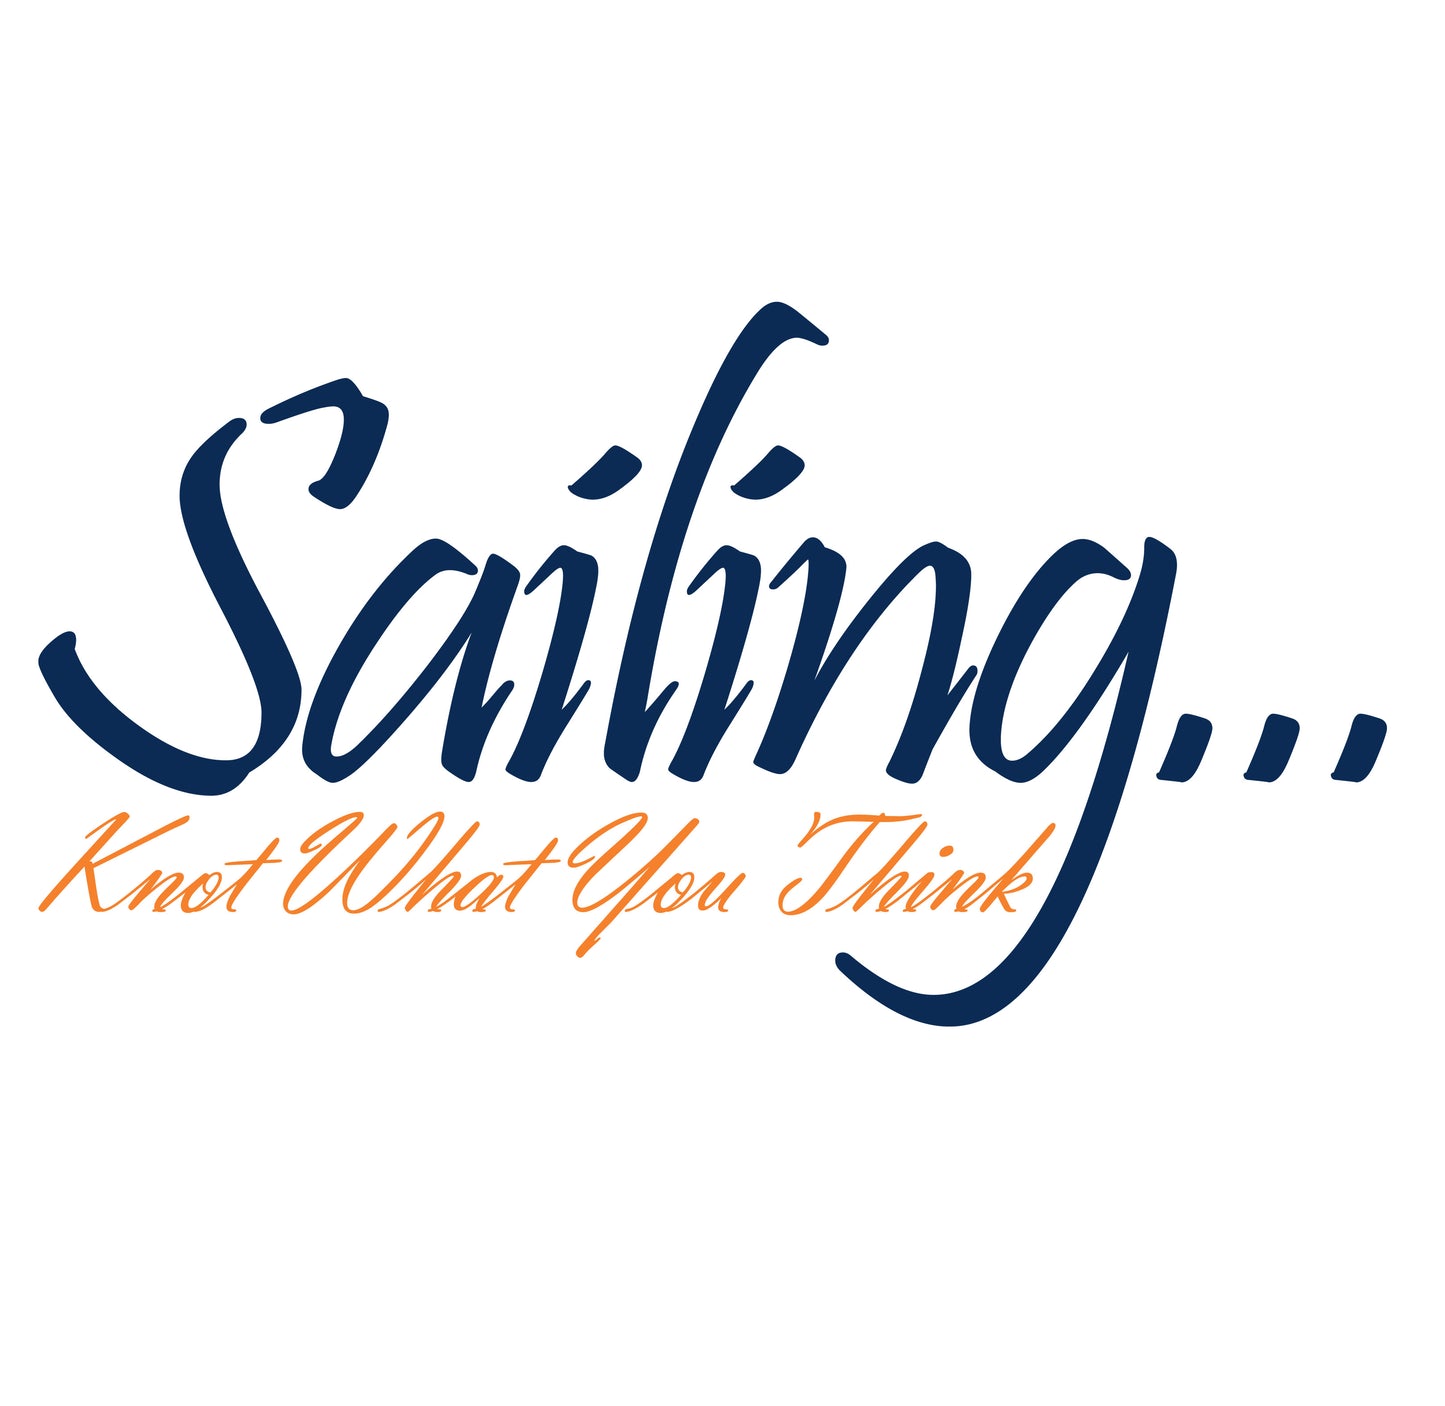 Sailing Knot Unisex T-Shirt